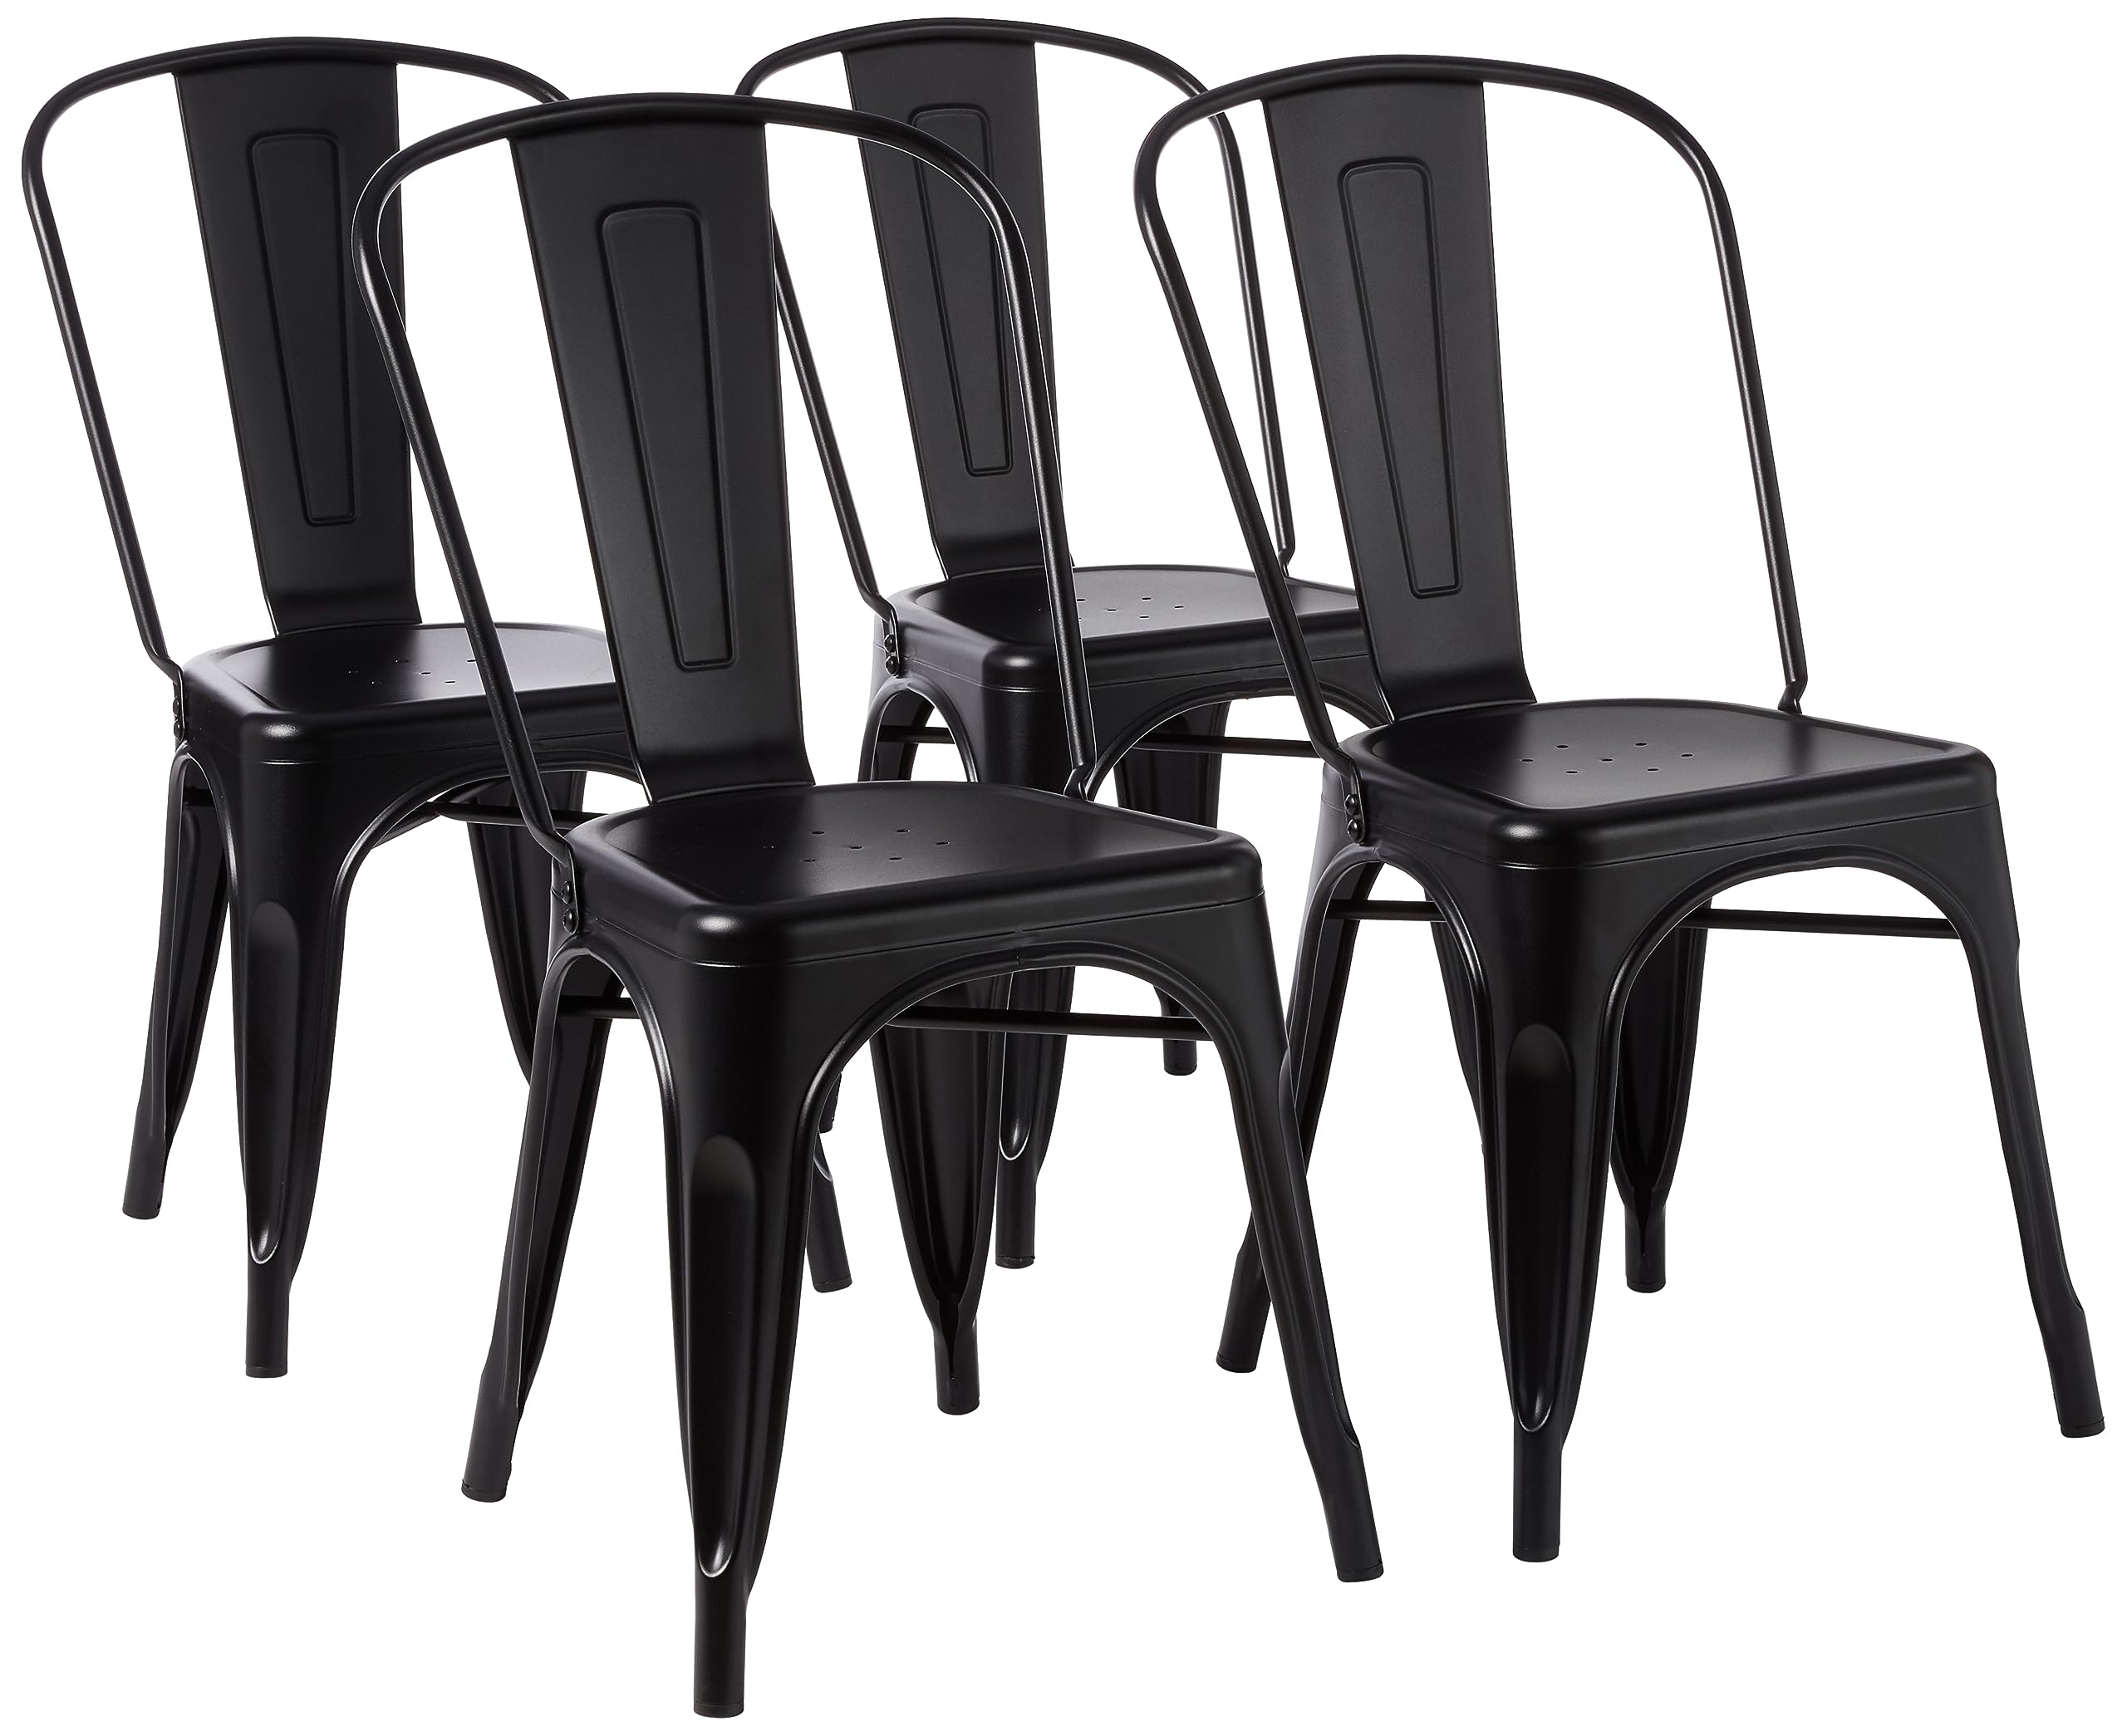 Amazon Basics Metal Dining Chairs - Set of 4